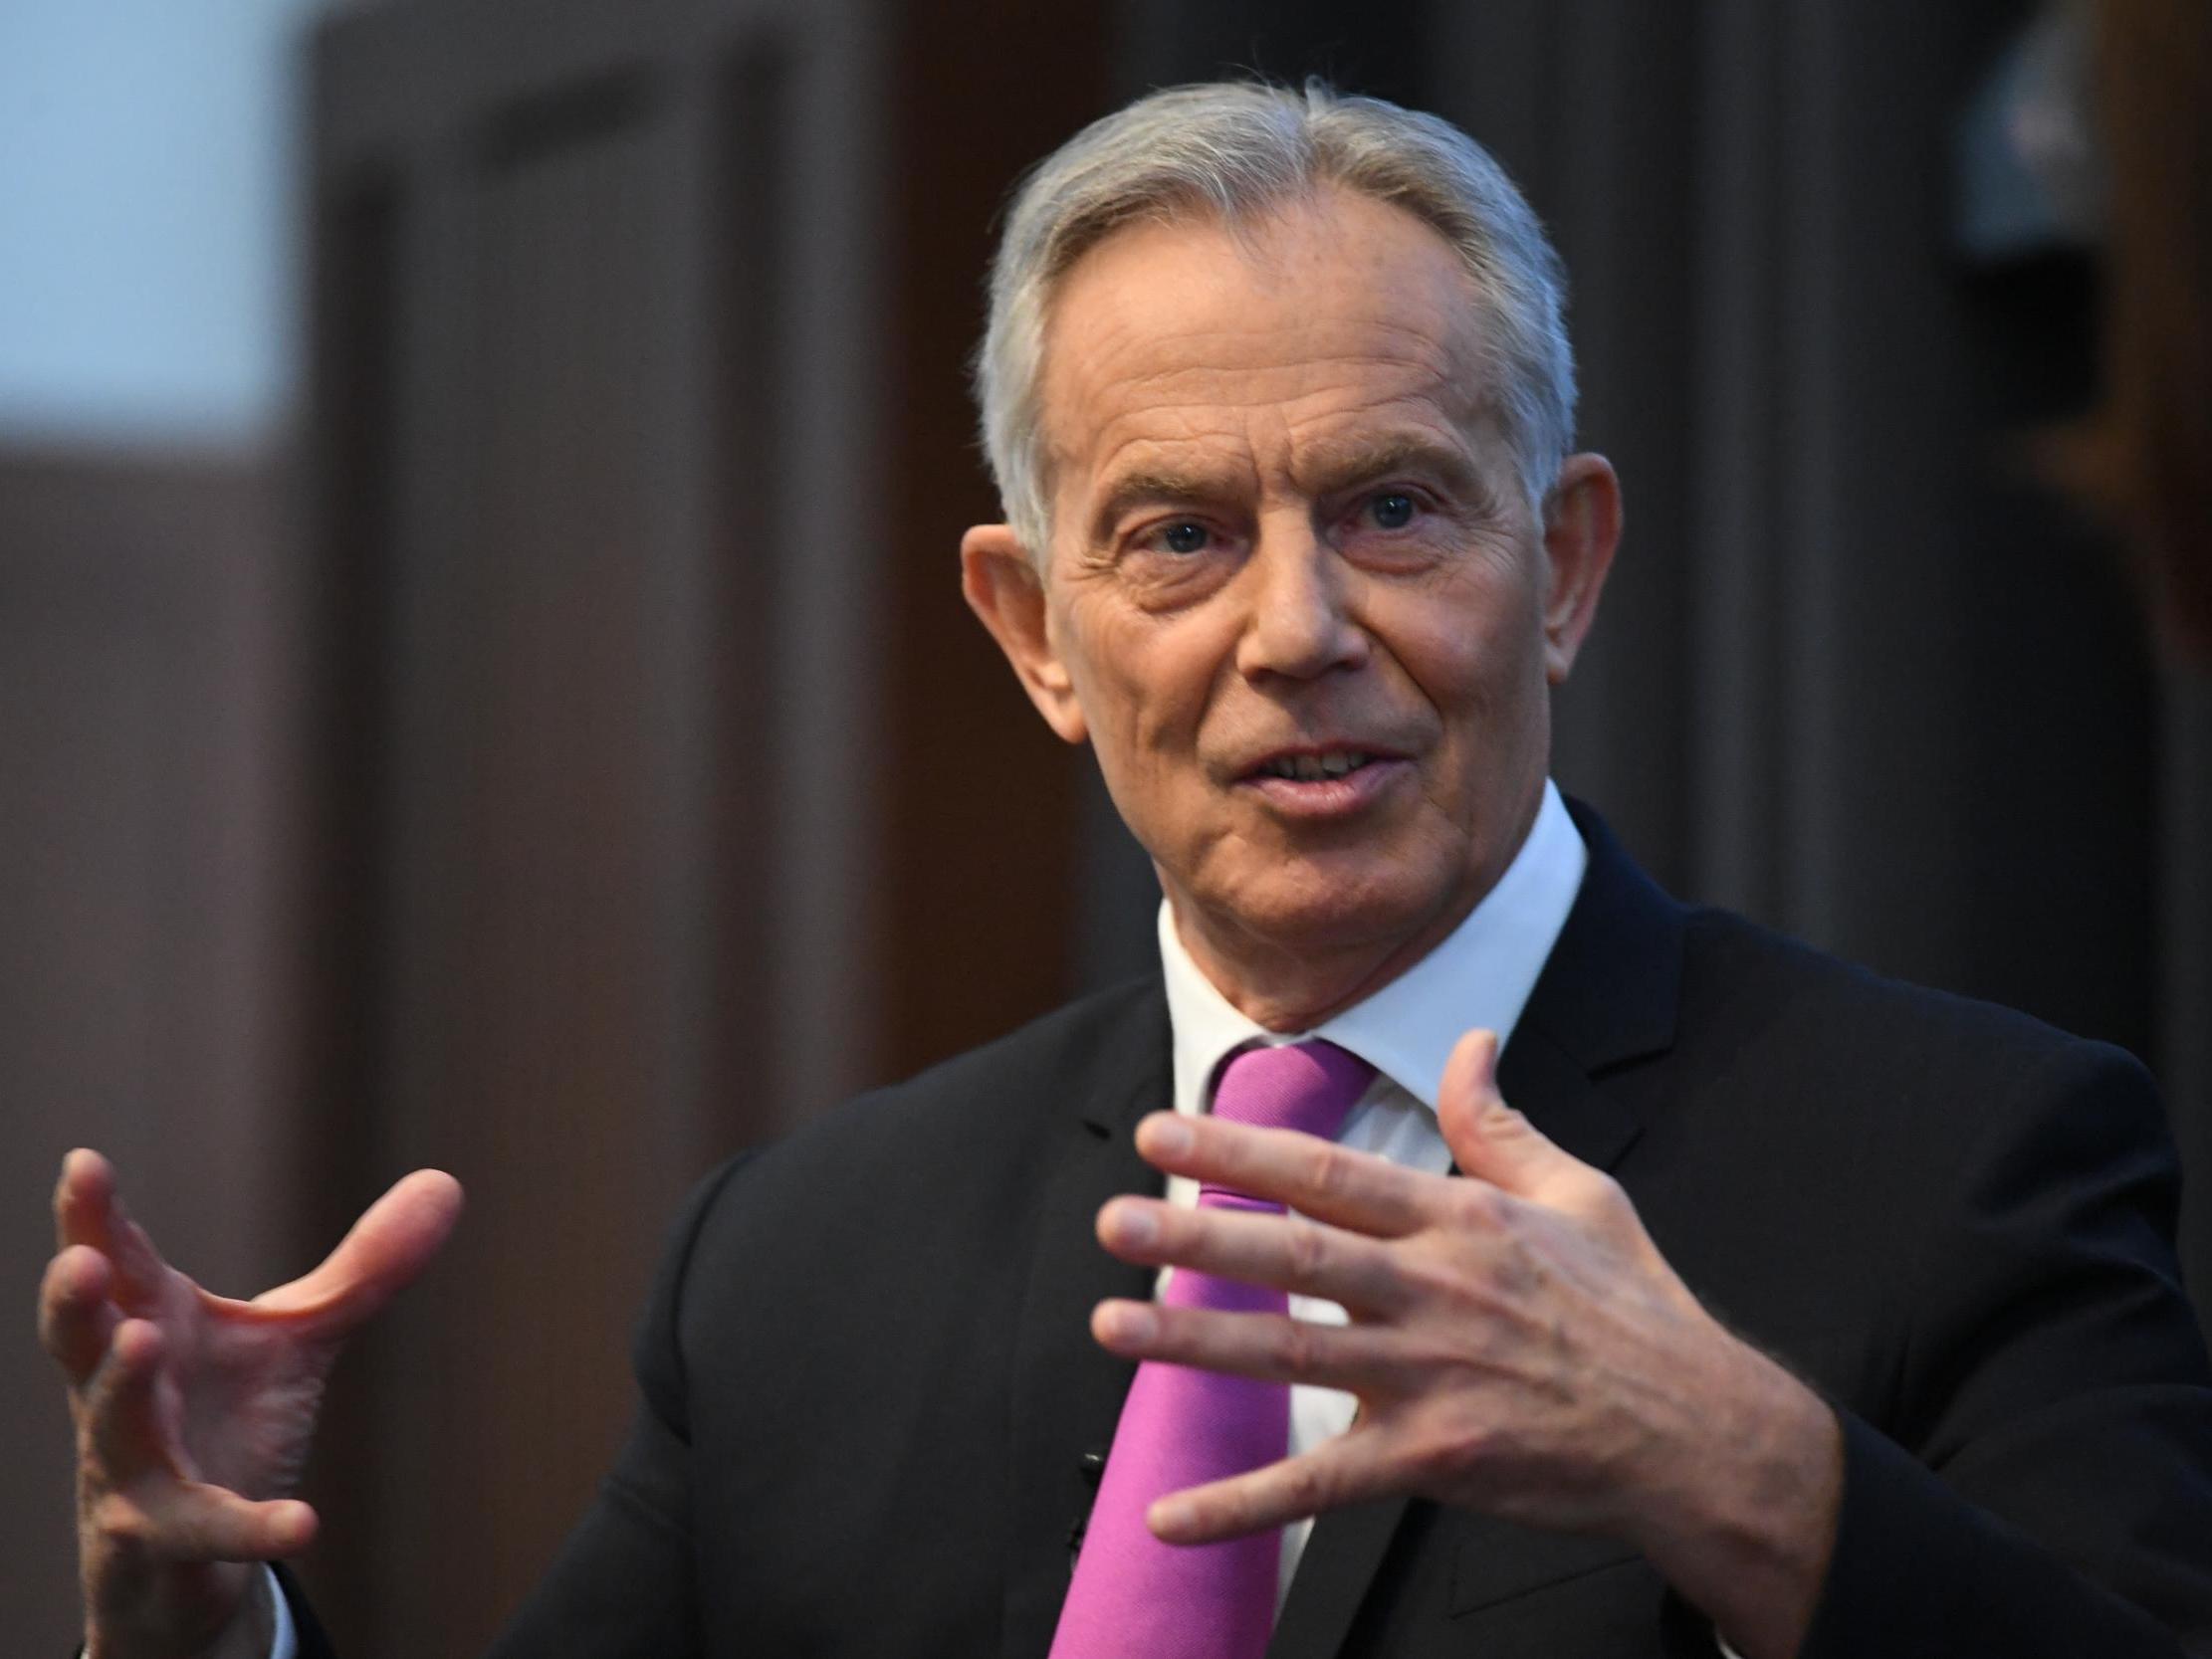 Blair speaks at King’s College London yesterday